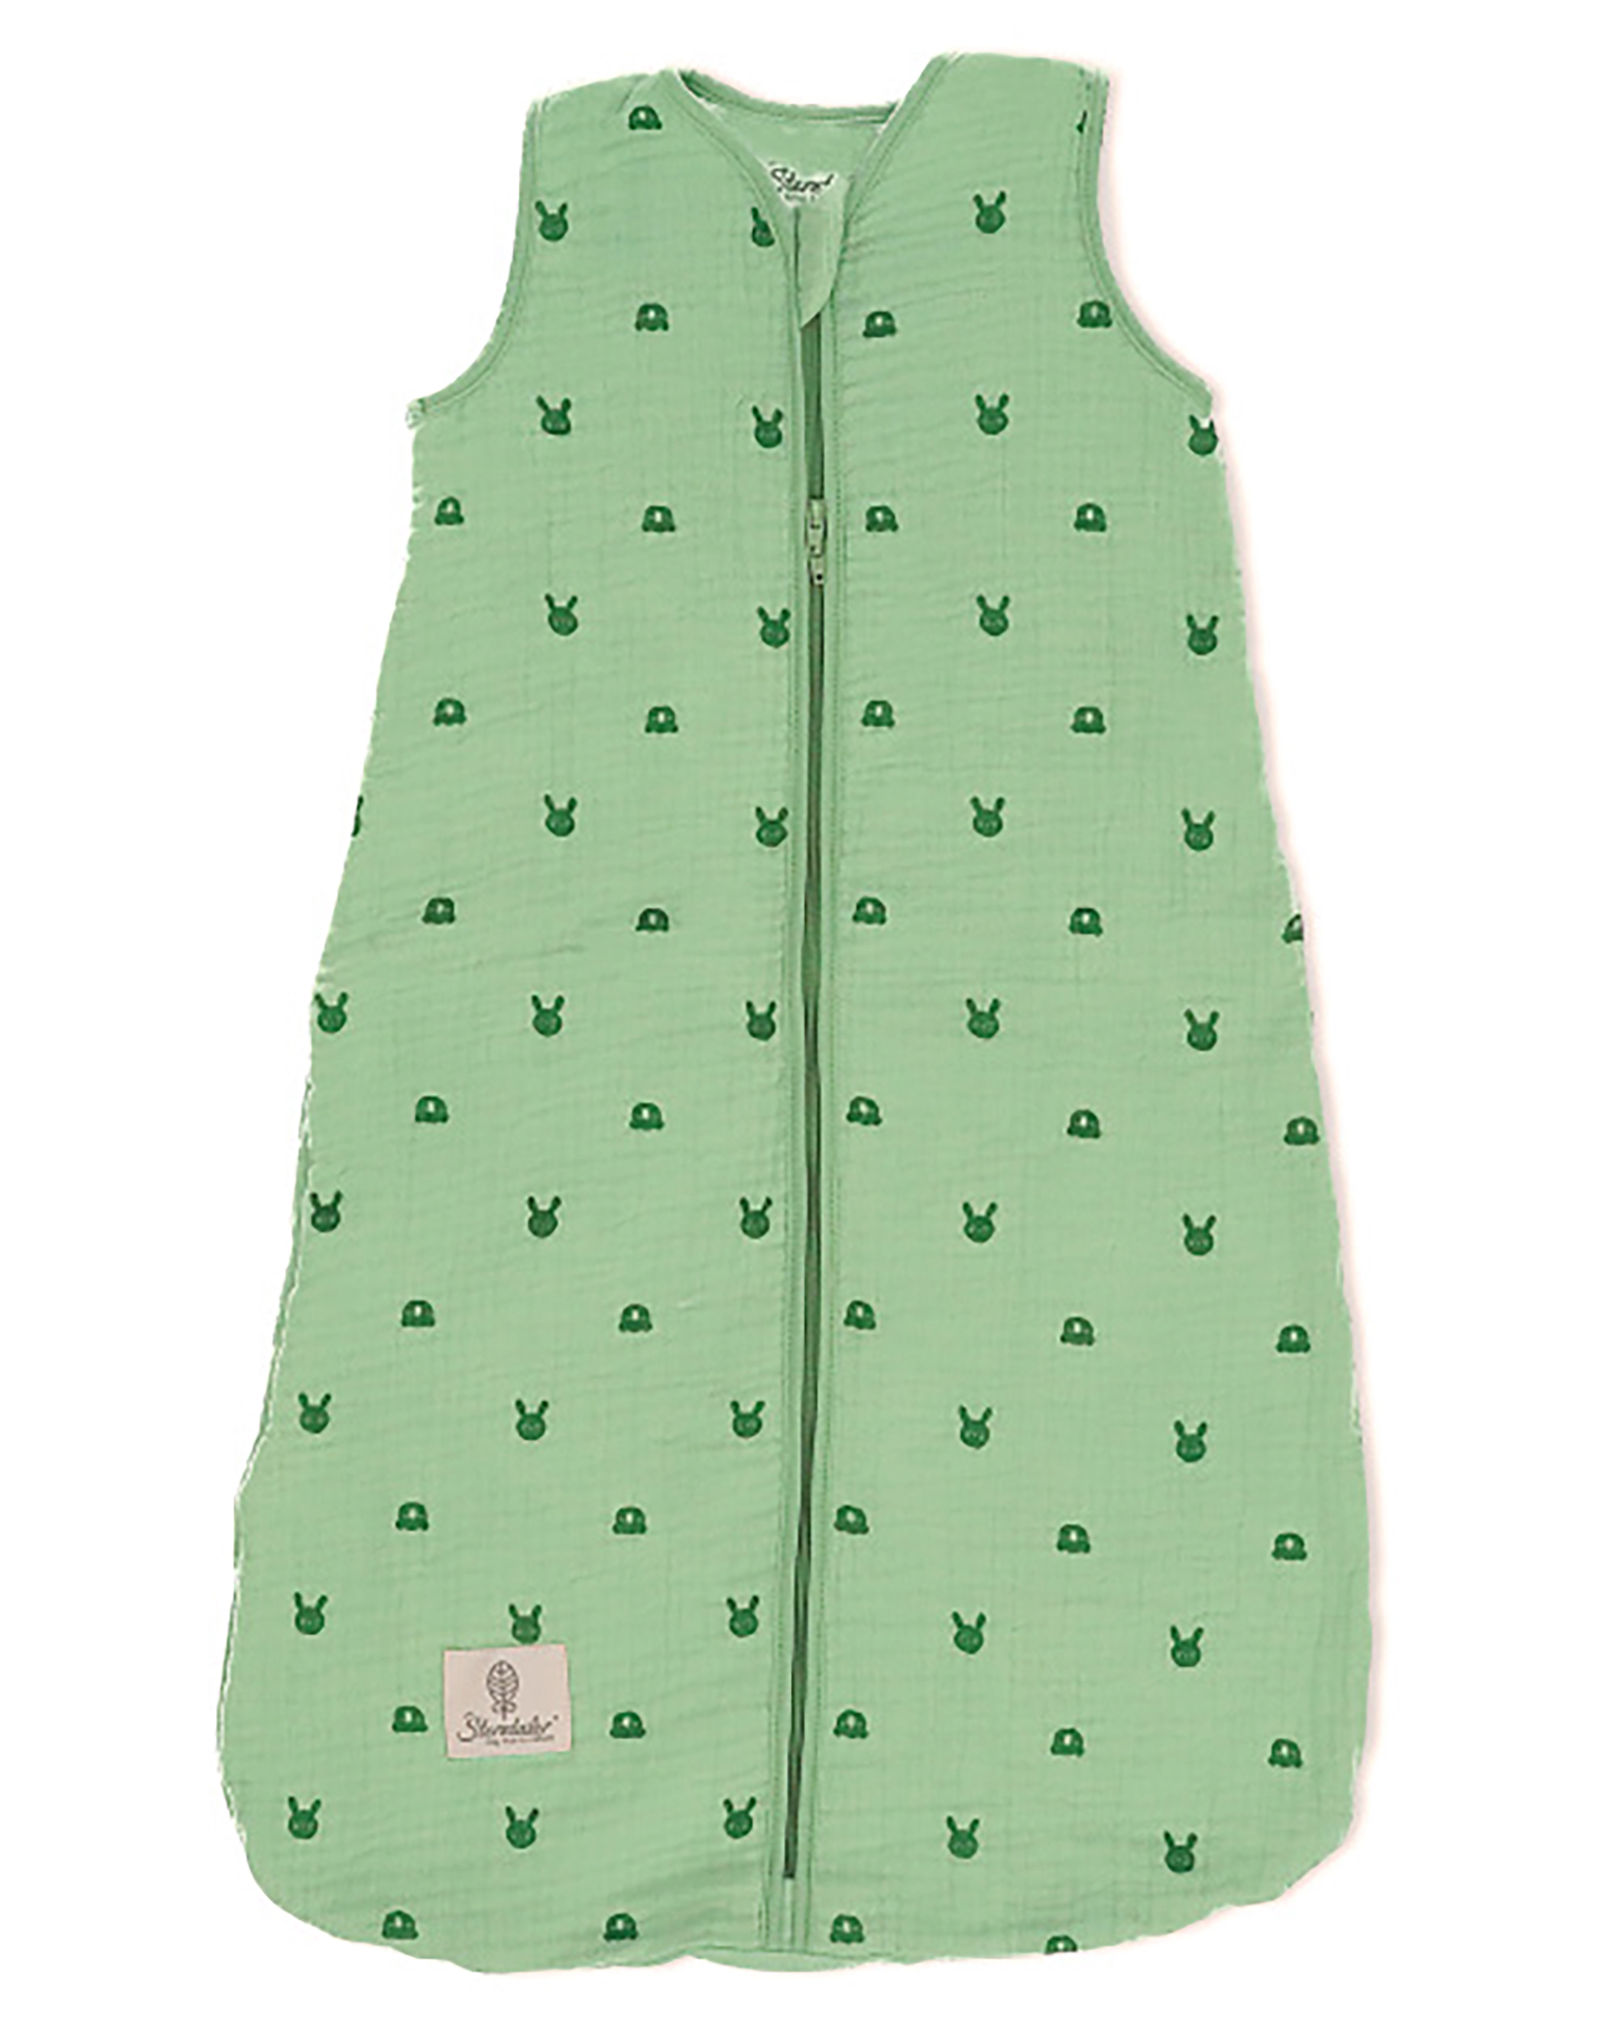 Musselin-Schlafsack KINNI & KALLA 110cm in grün kaufen